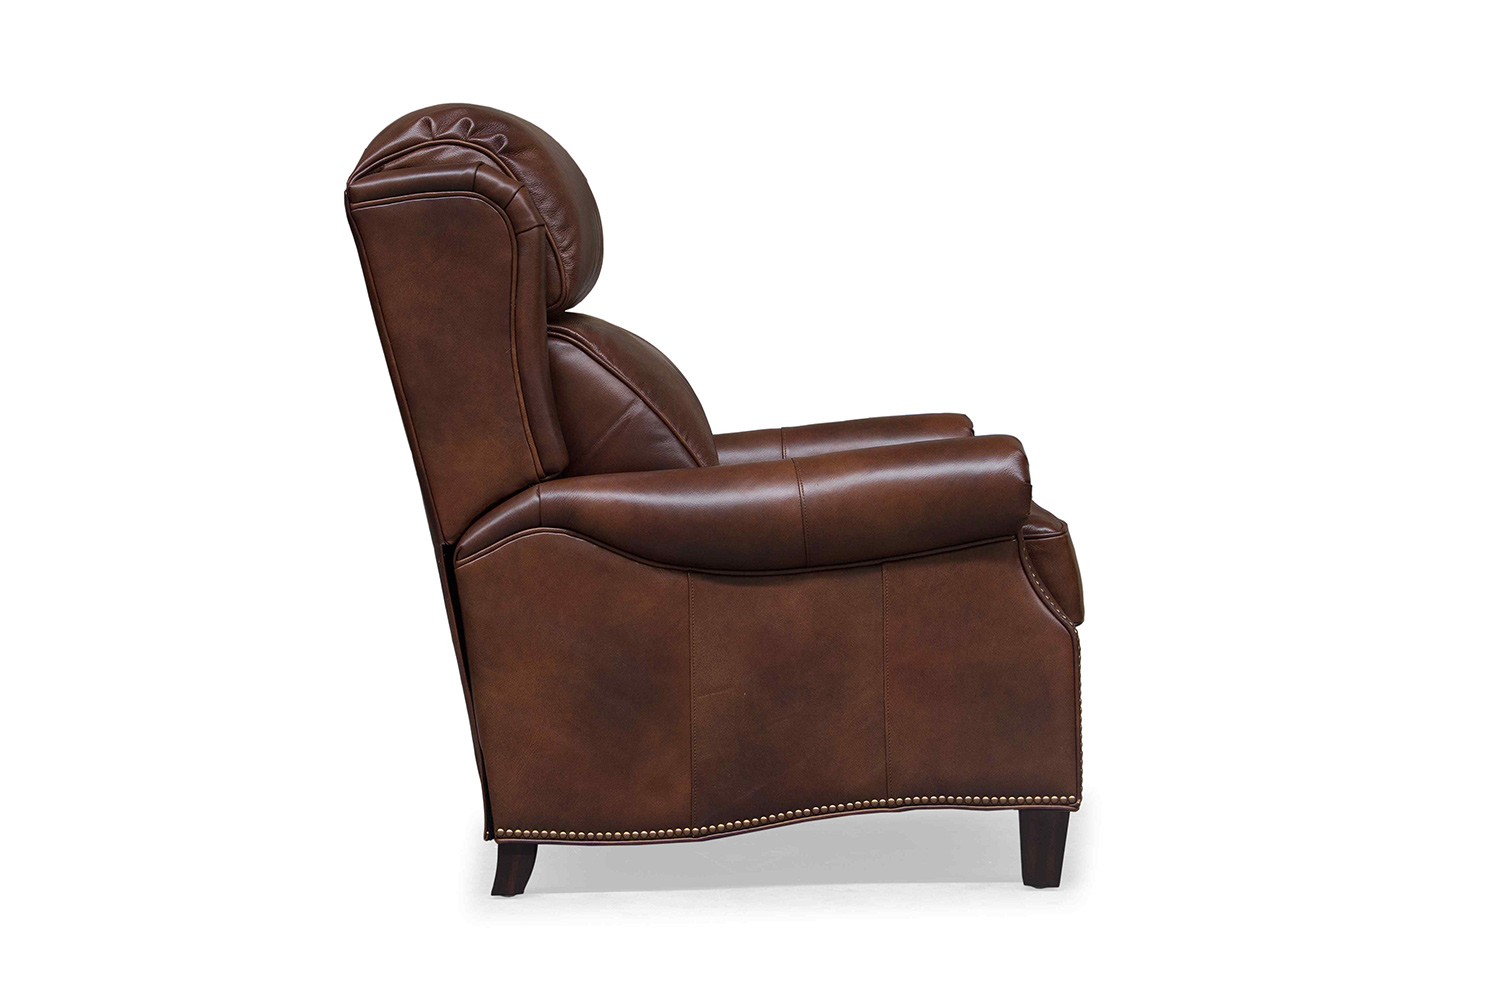 Barcalounger Meade Recliner Chair - Worthington Cognac/All Leather